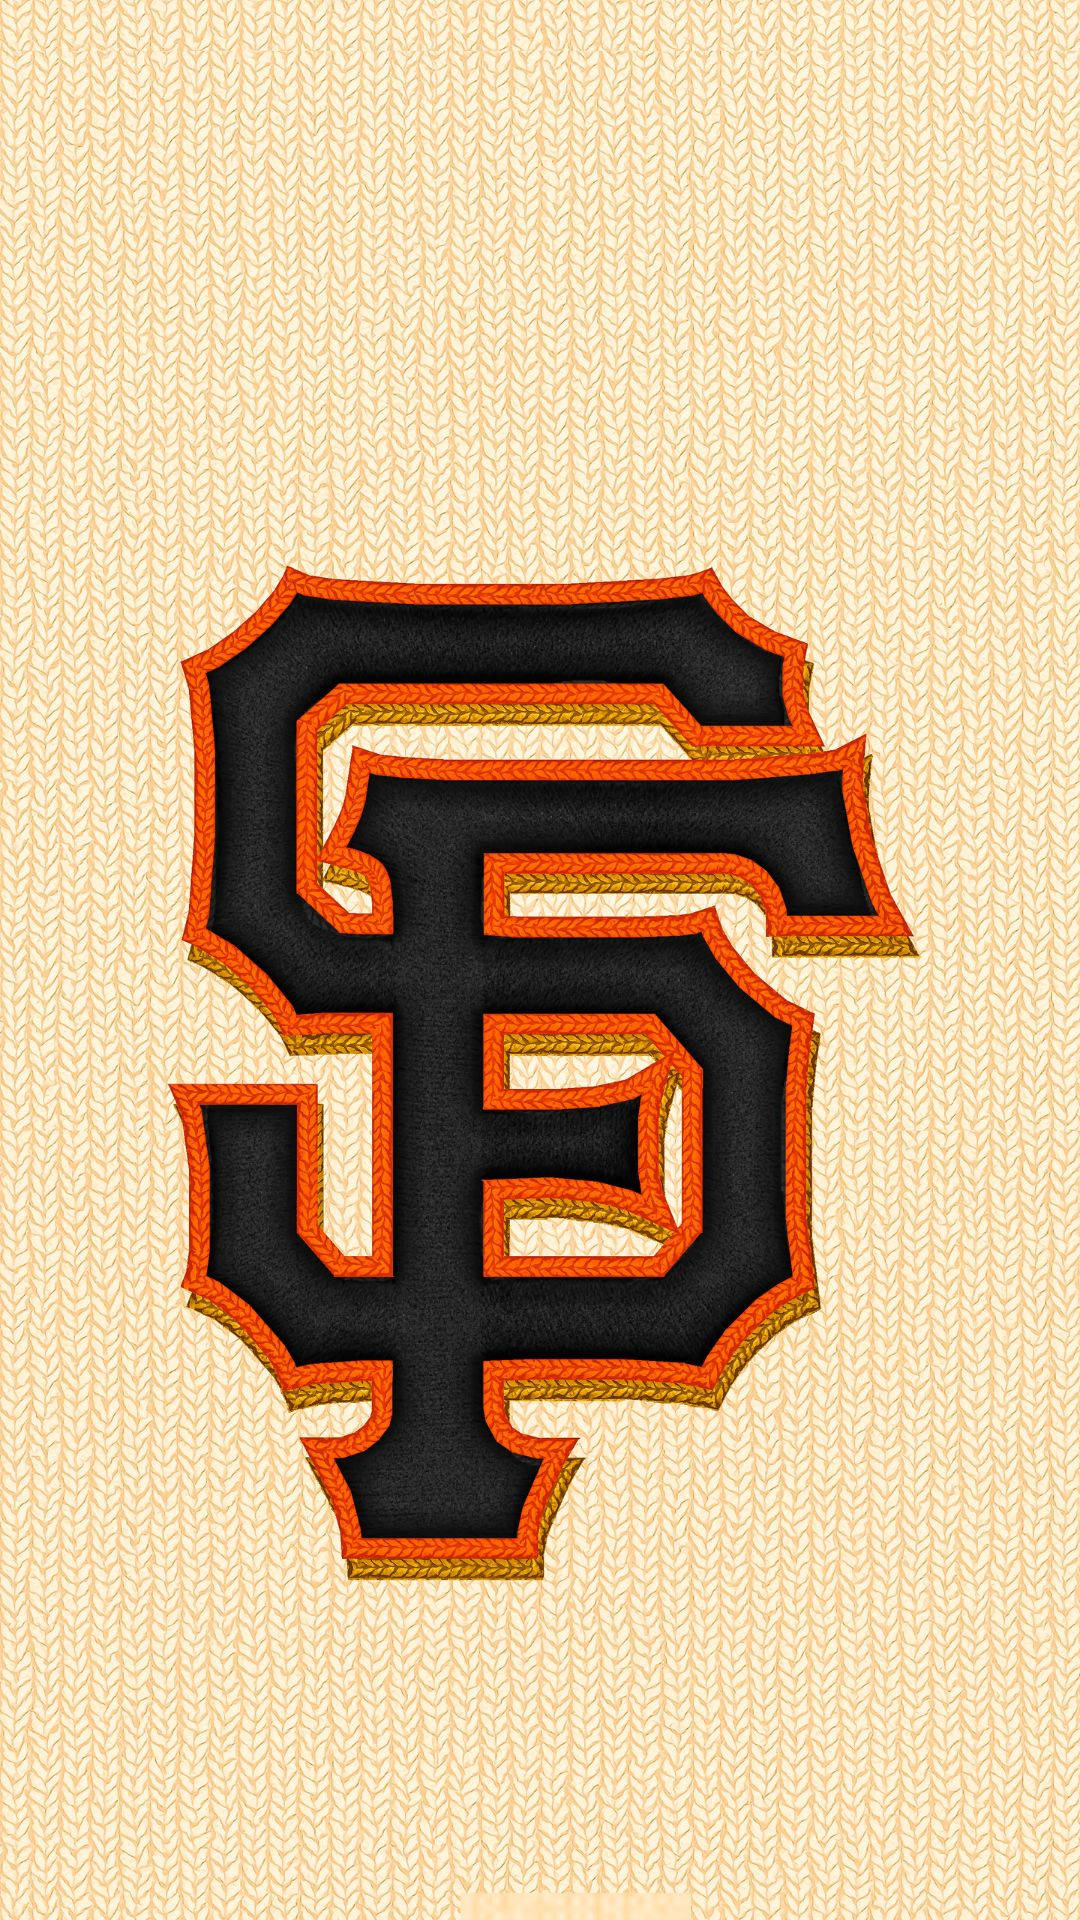 San Francisco Giants Logo Orange Outline Wallpaper